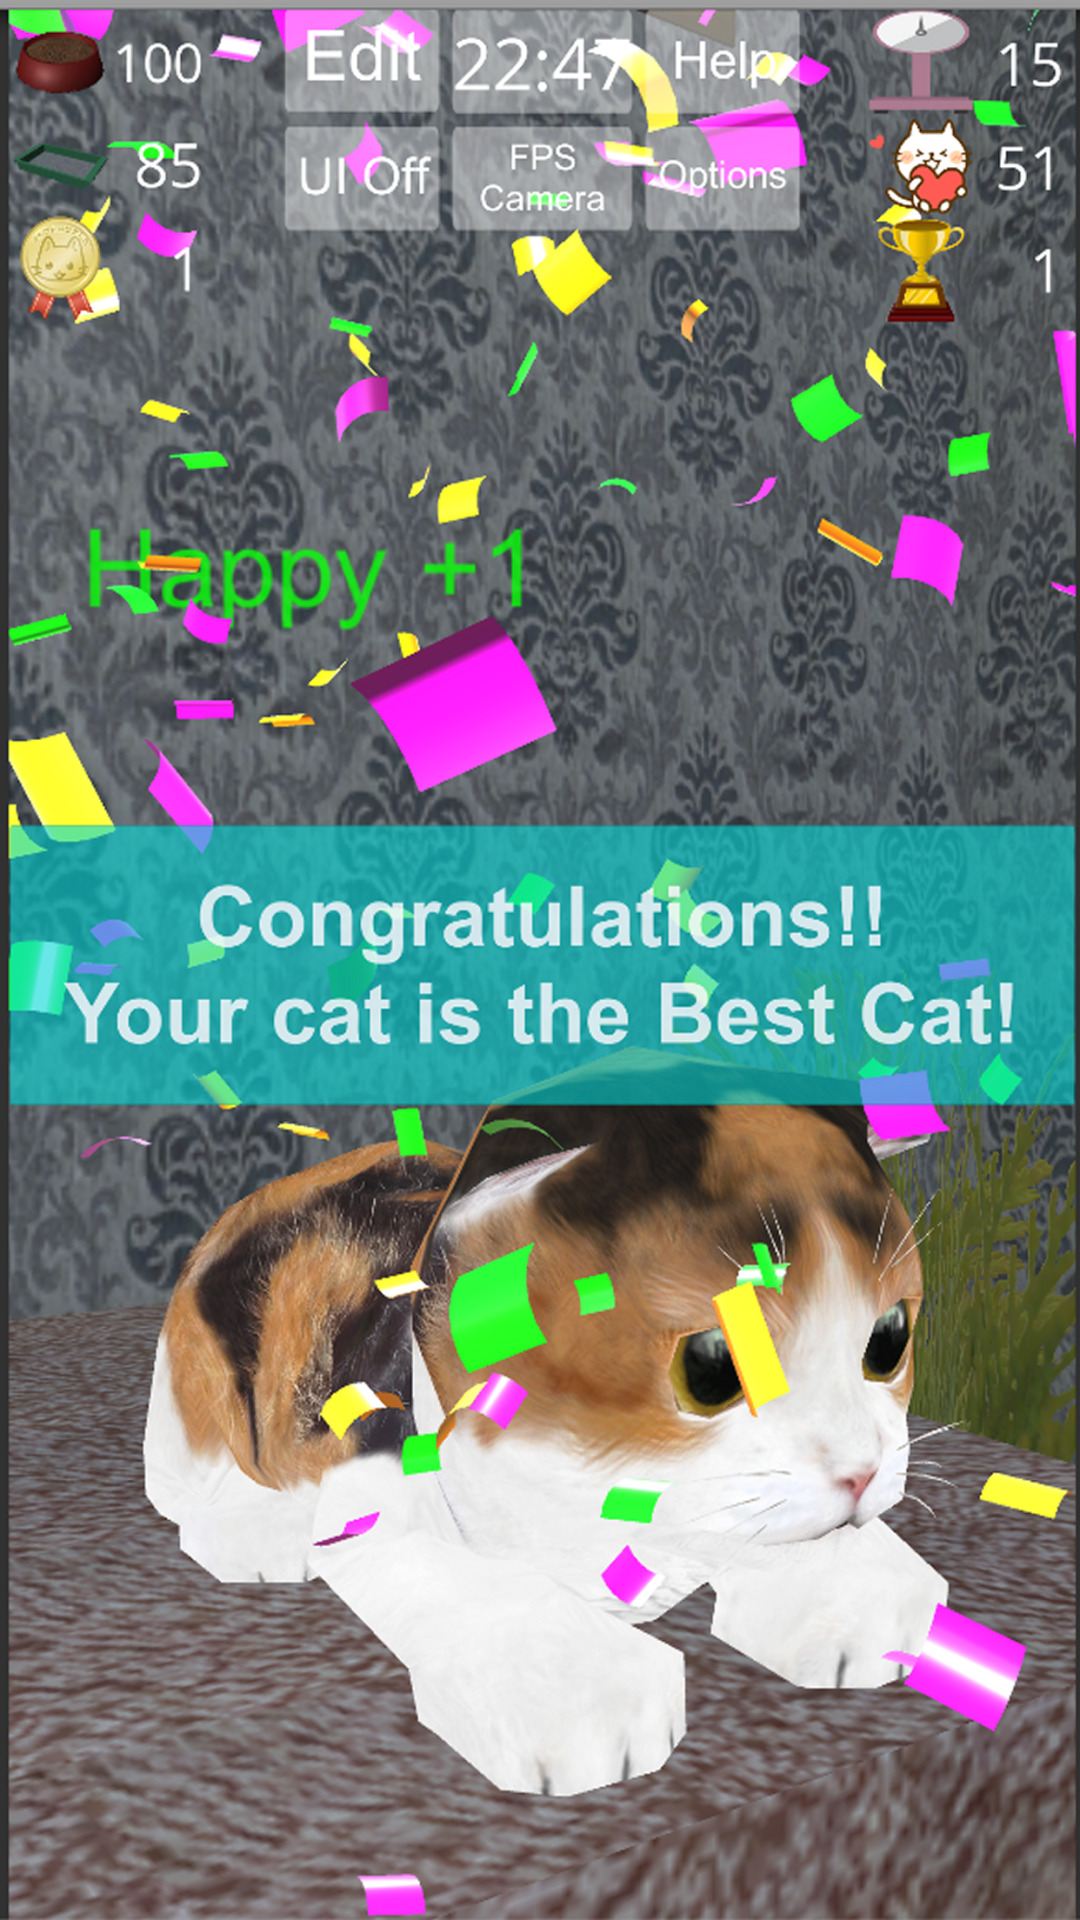 Talking Juan Cat Simulation download the last version for ipod